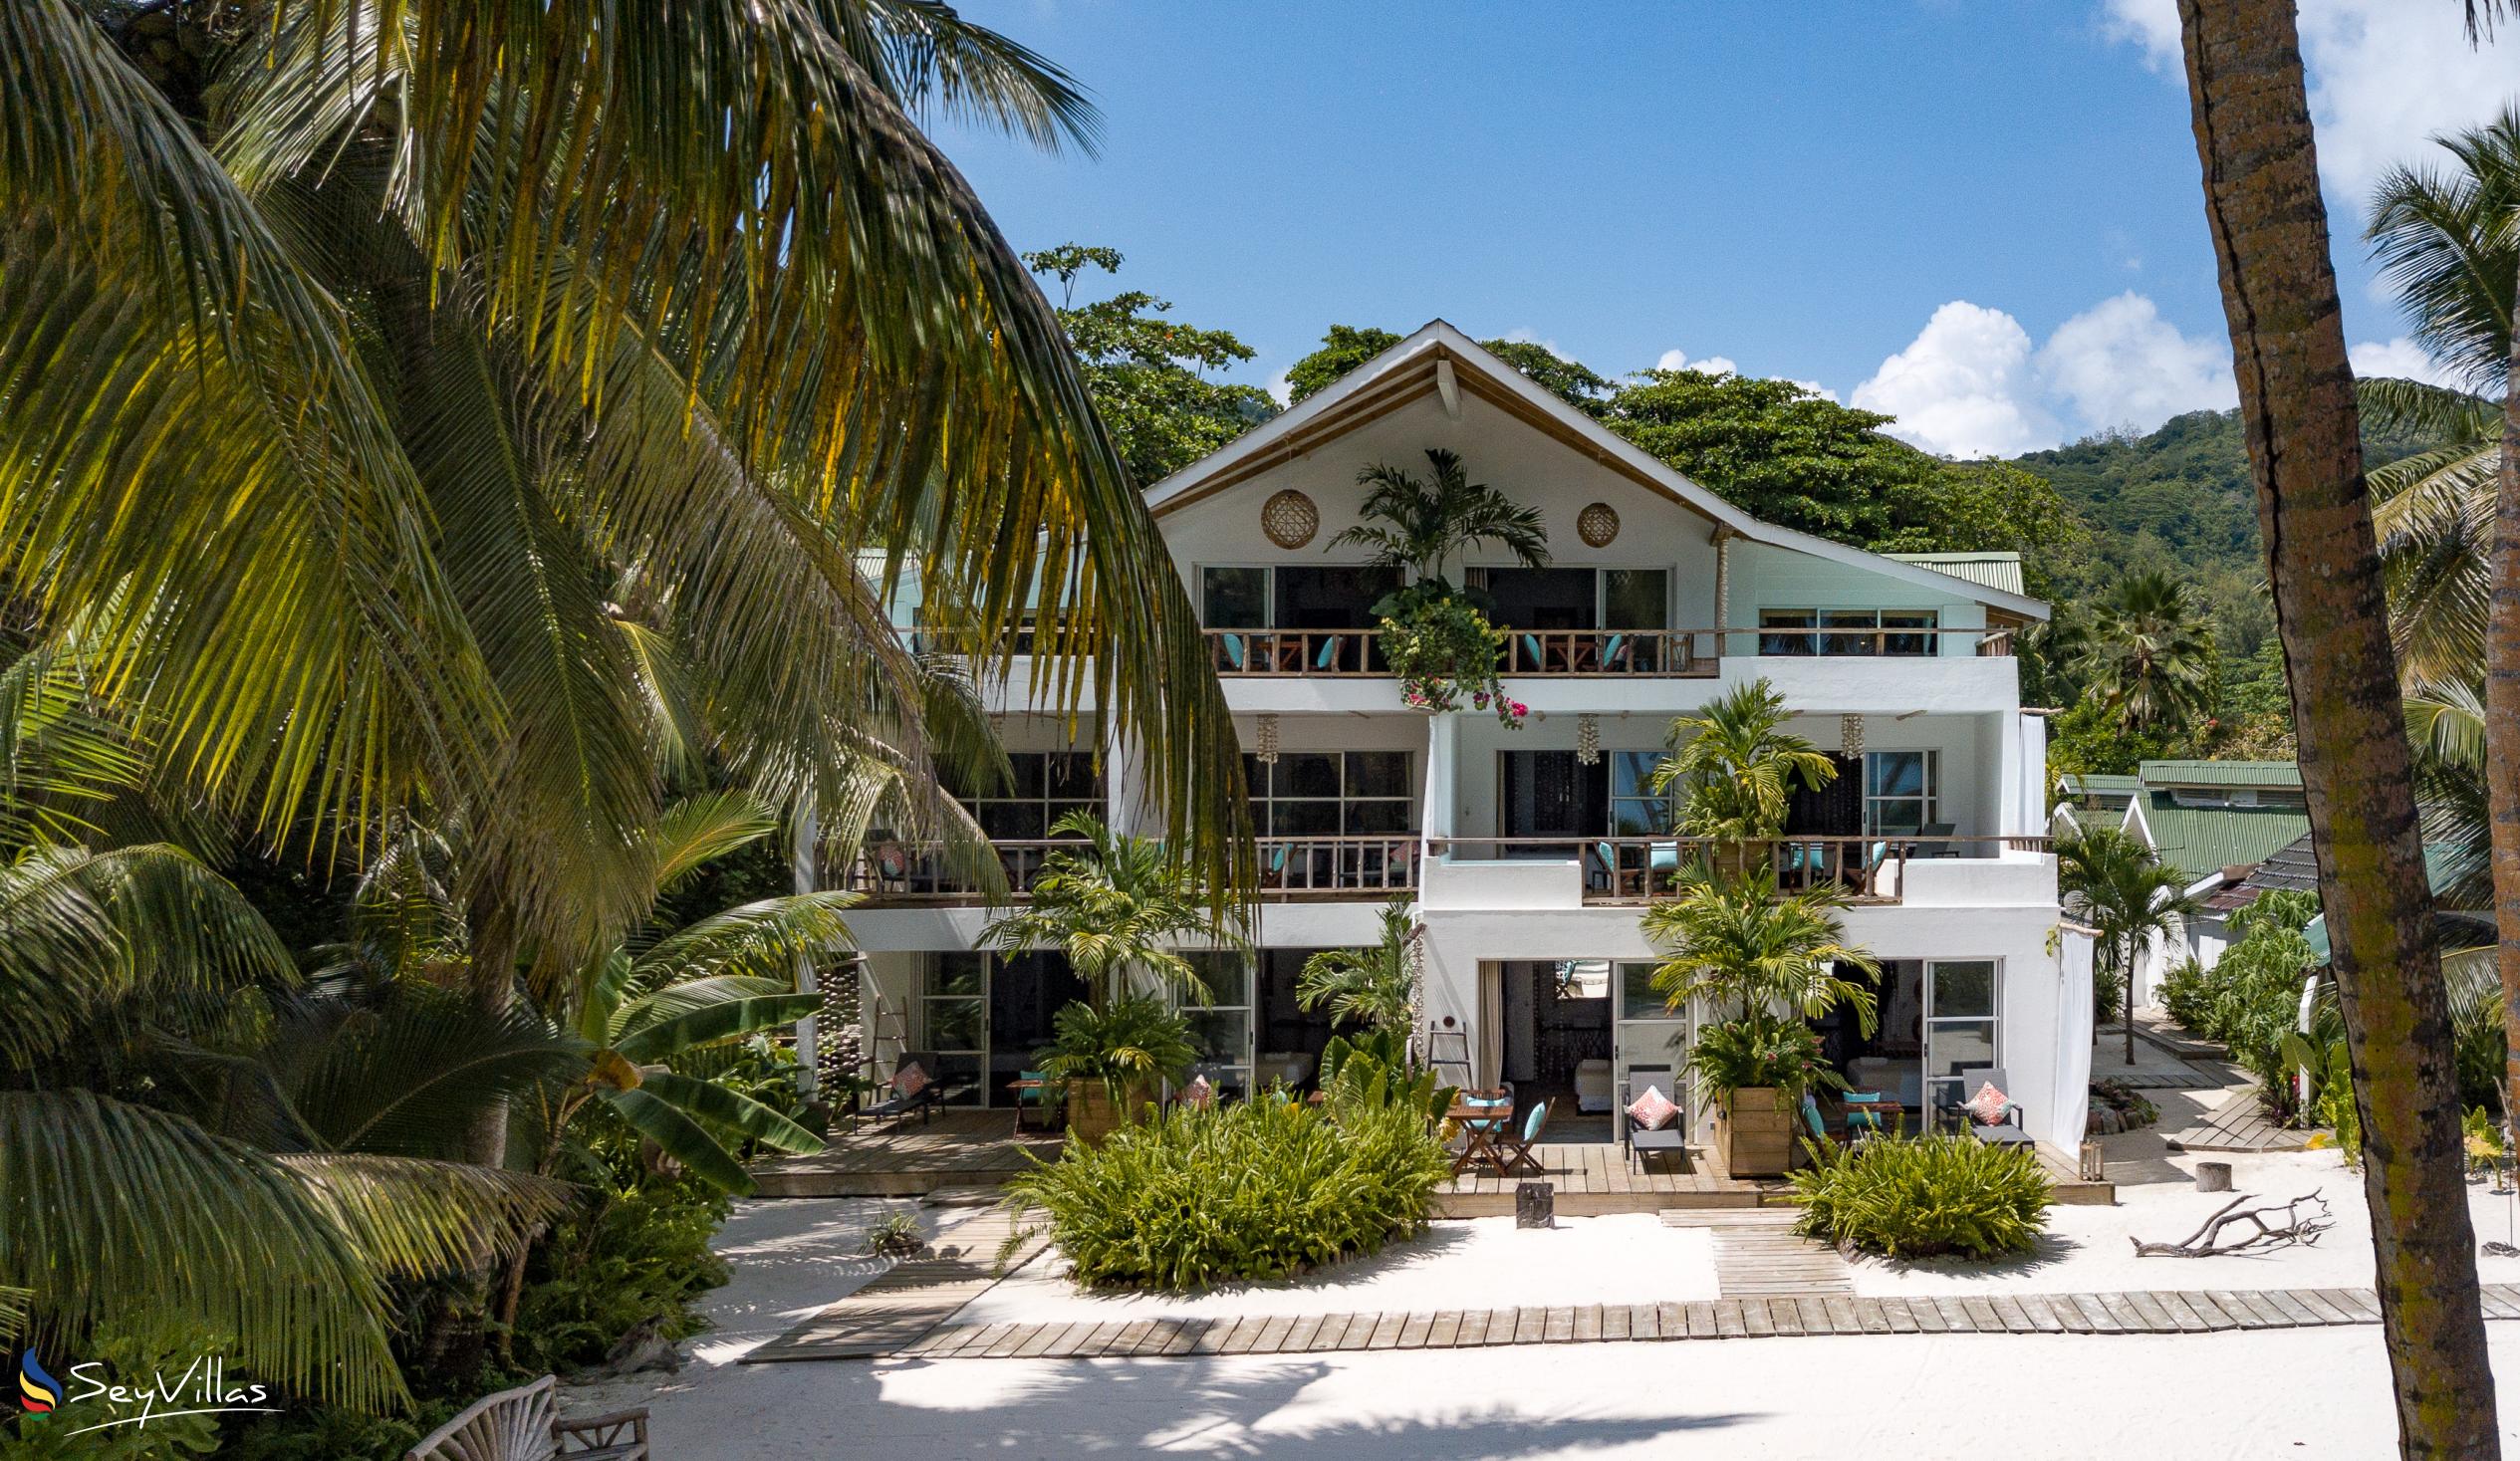 Photo 92: Bliss Hotel Praslin - Beach House - Beach Garden Room - Praslin (Seychelles)